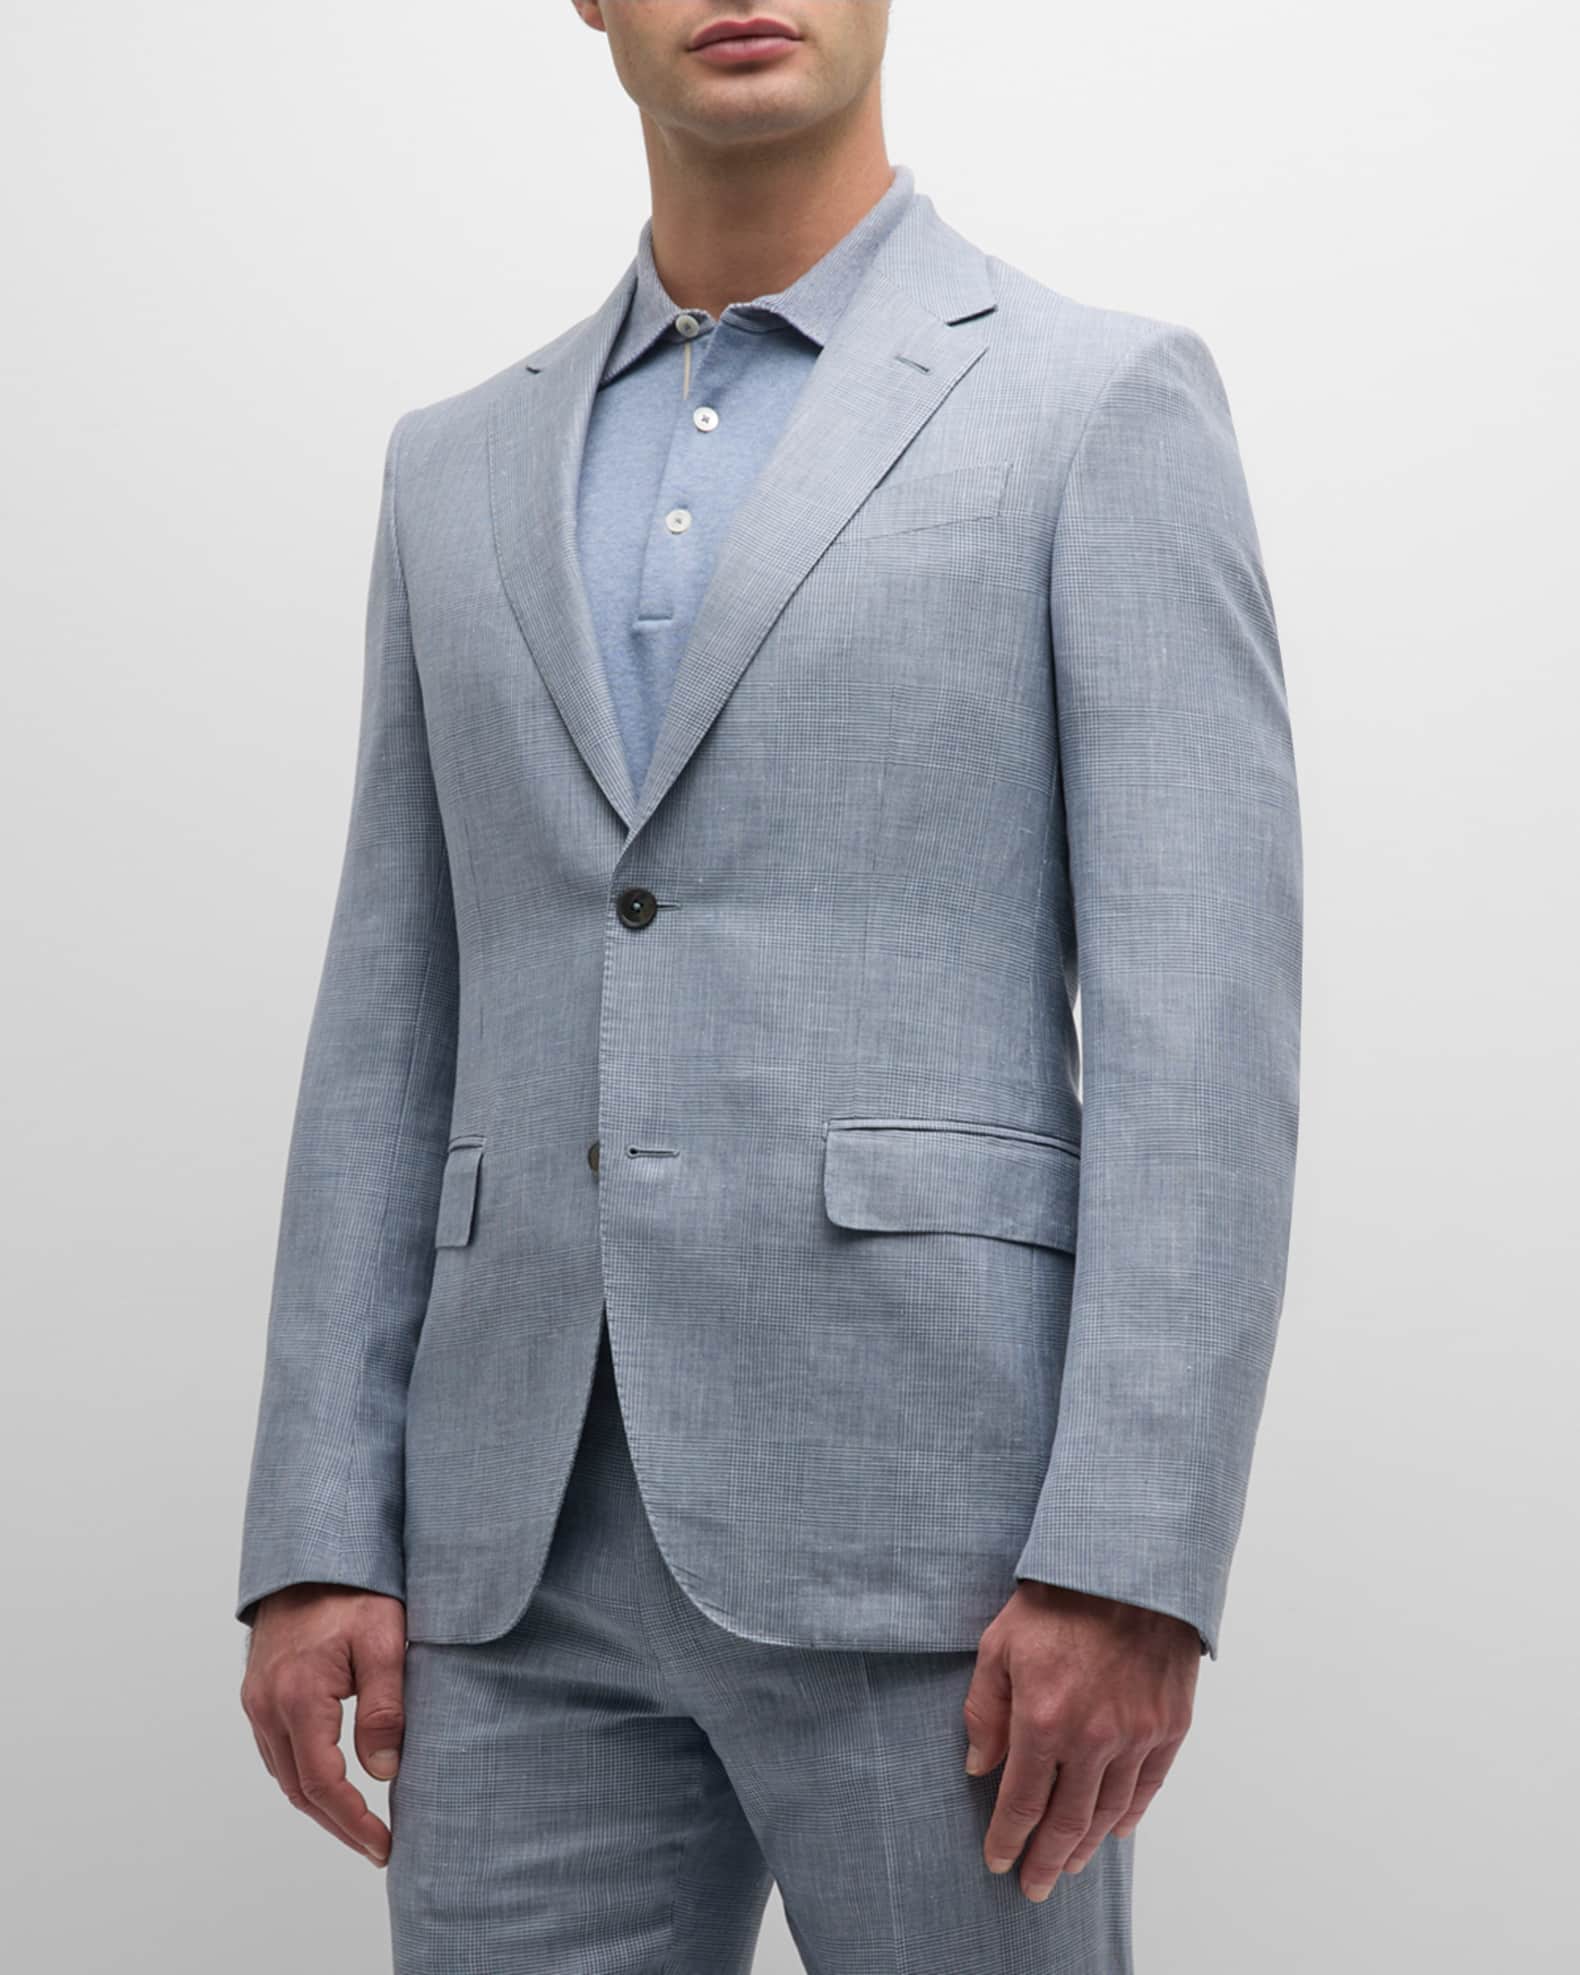 ZEGNA Men's Plaid Crossover Wool Linen Suit | Neiman Marcus